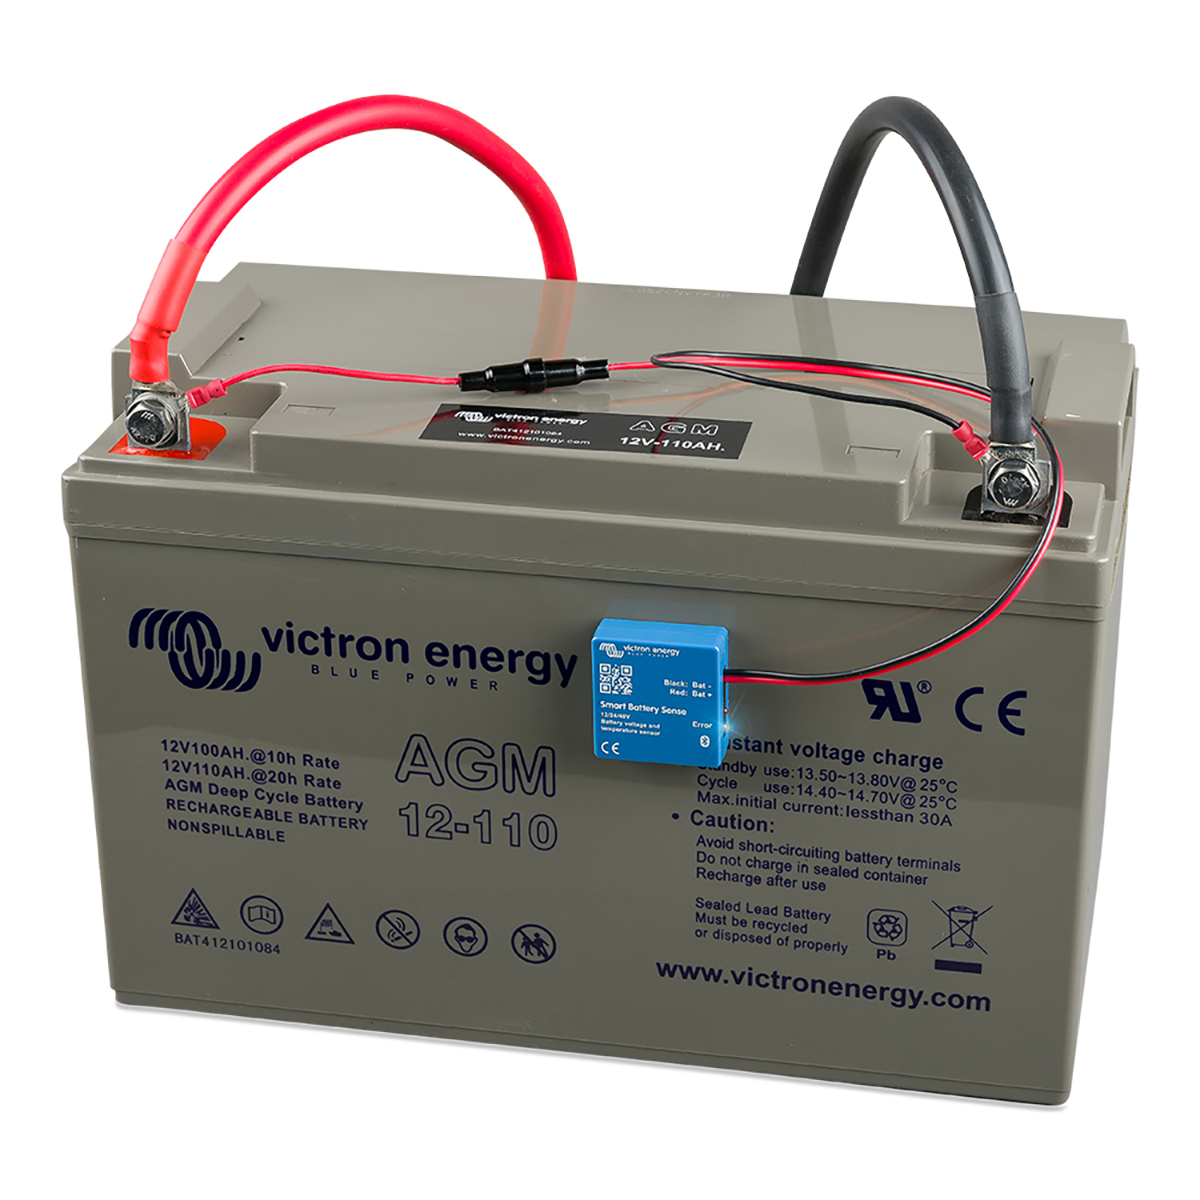 Batteriesensor und Temperatursensor Spannungsfühler Smart VICTRON ENERGY Batteriesensor